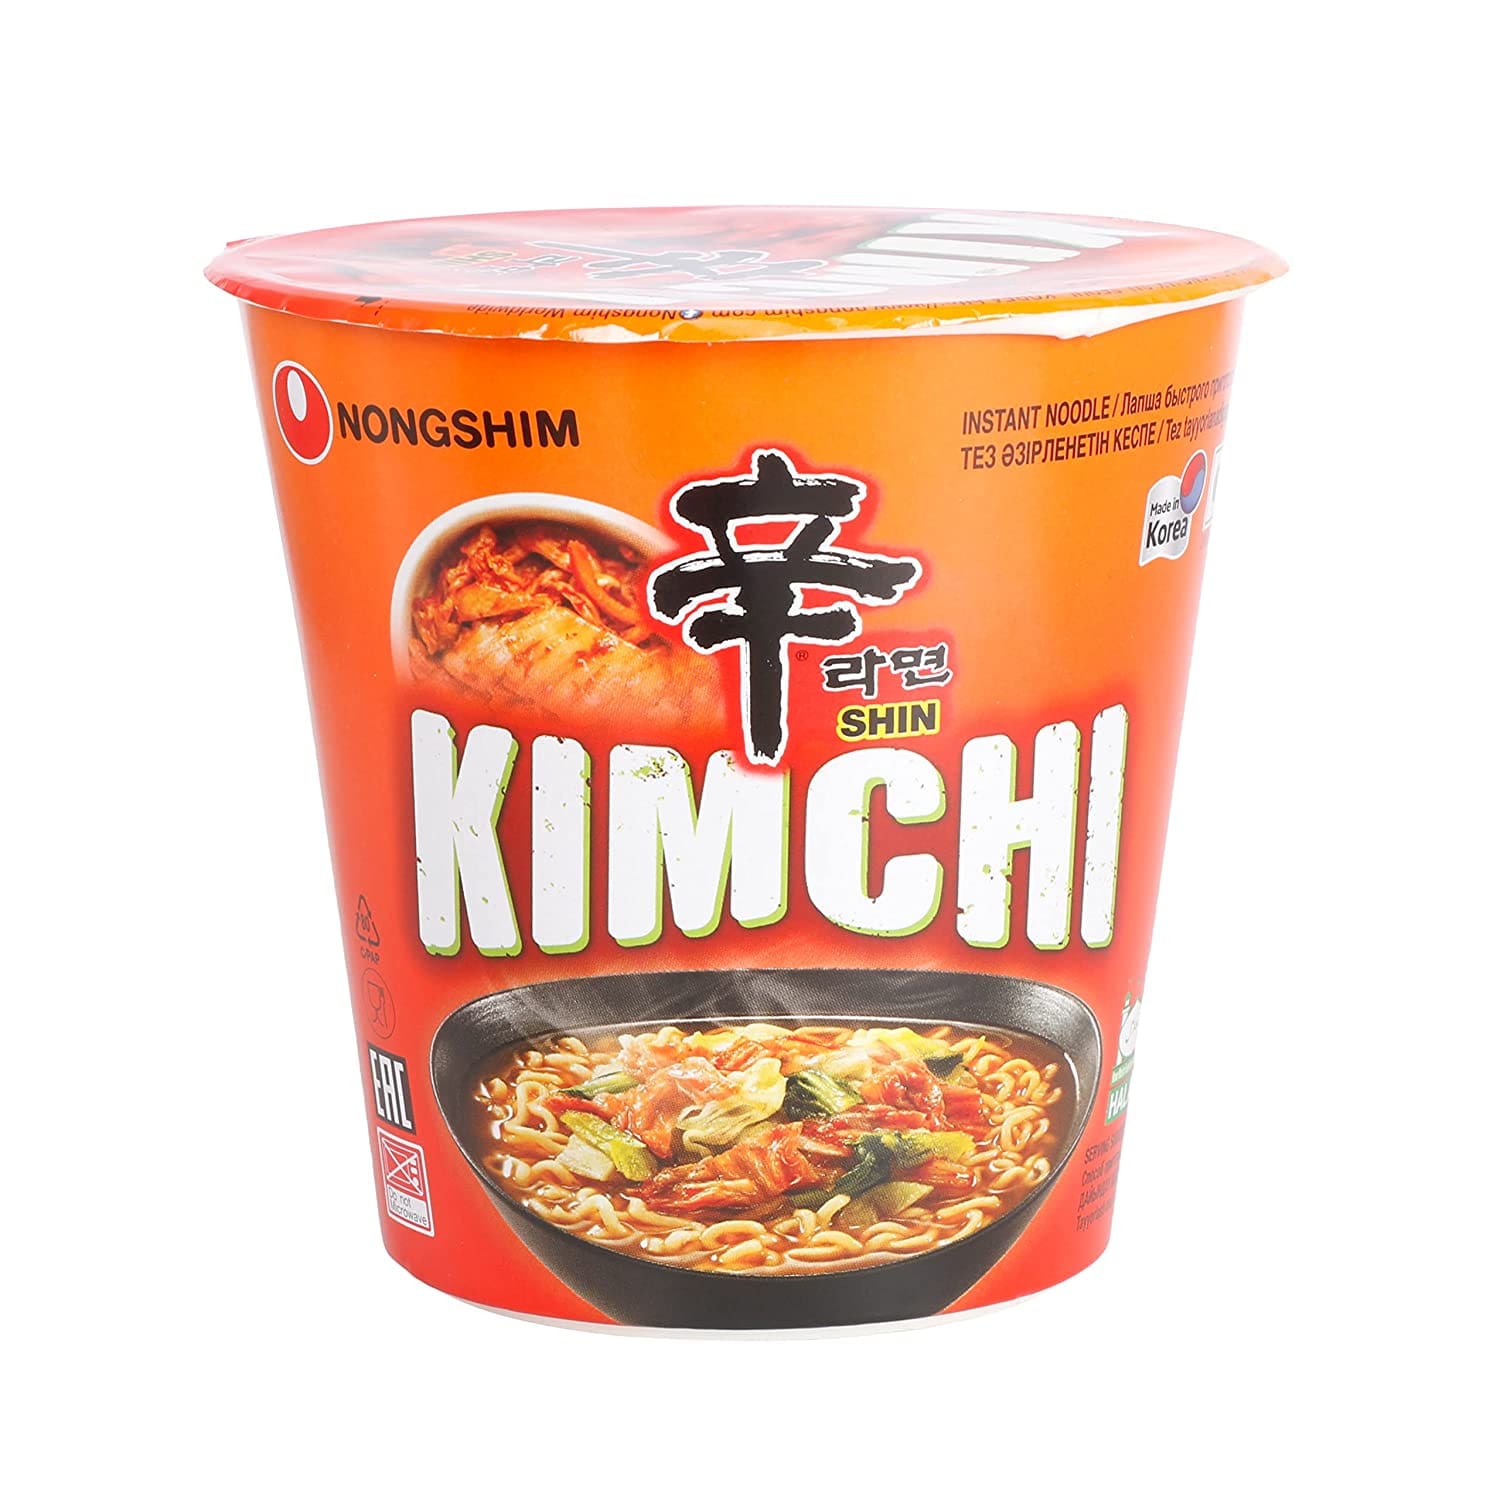 Shin Ramen Kimchi Instant Noodles (Review) Nongshim Shin Ramyun 신라면 김치 농심  Korean Food 🇰🇷 